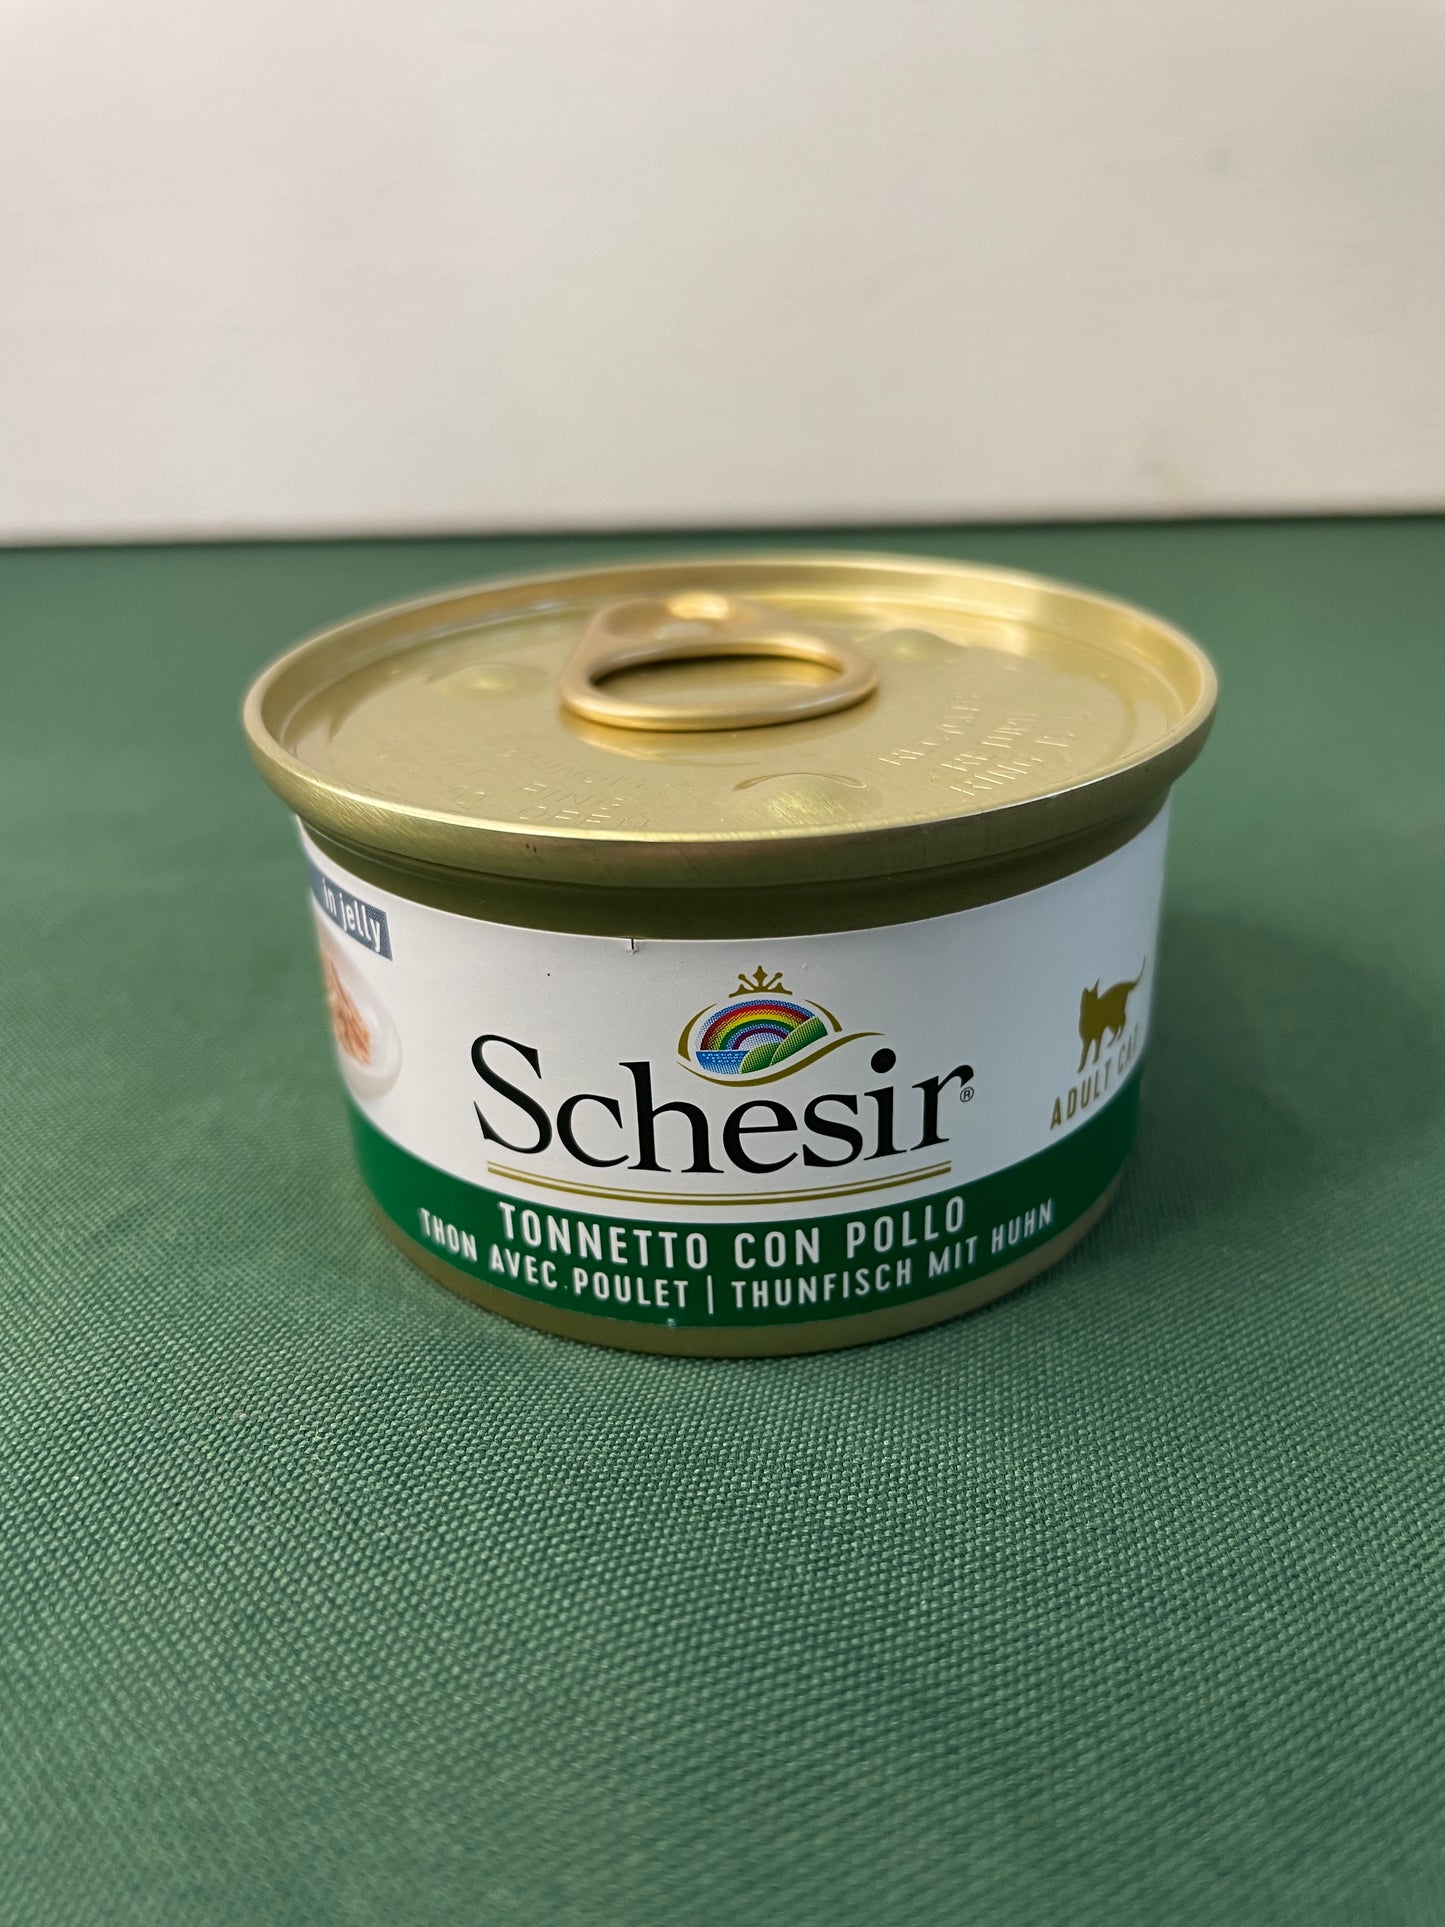 Schesir - Lattina di Umido Completo in Gelatina per Gatti Jelly 85g